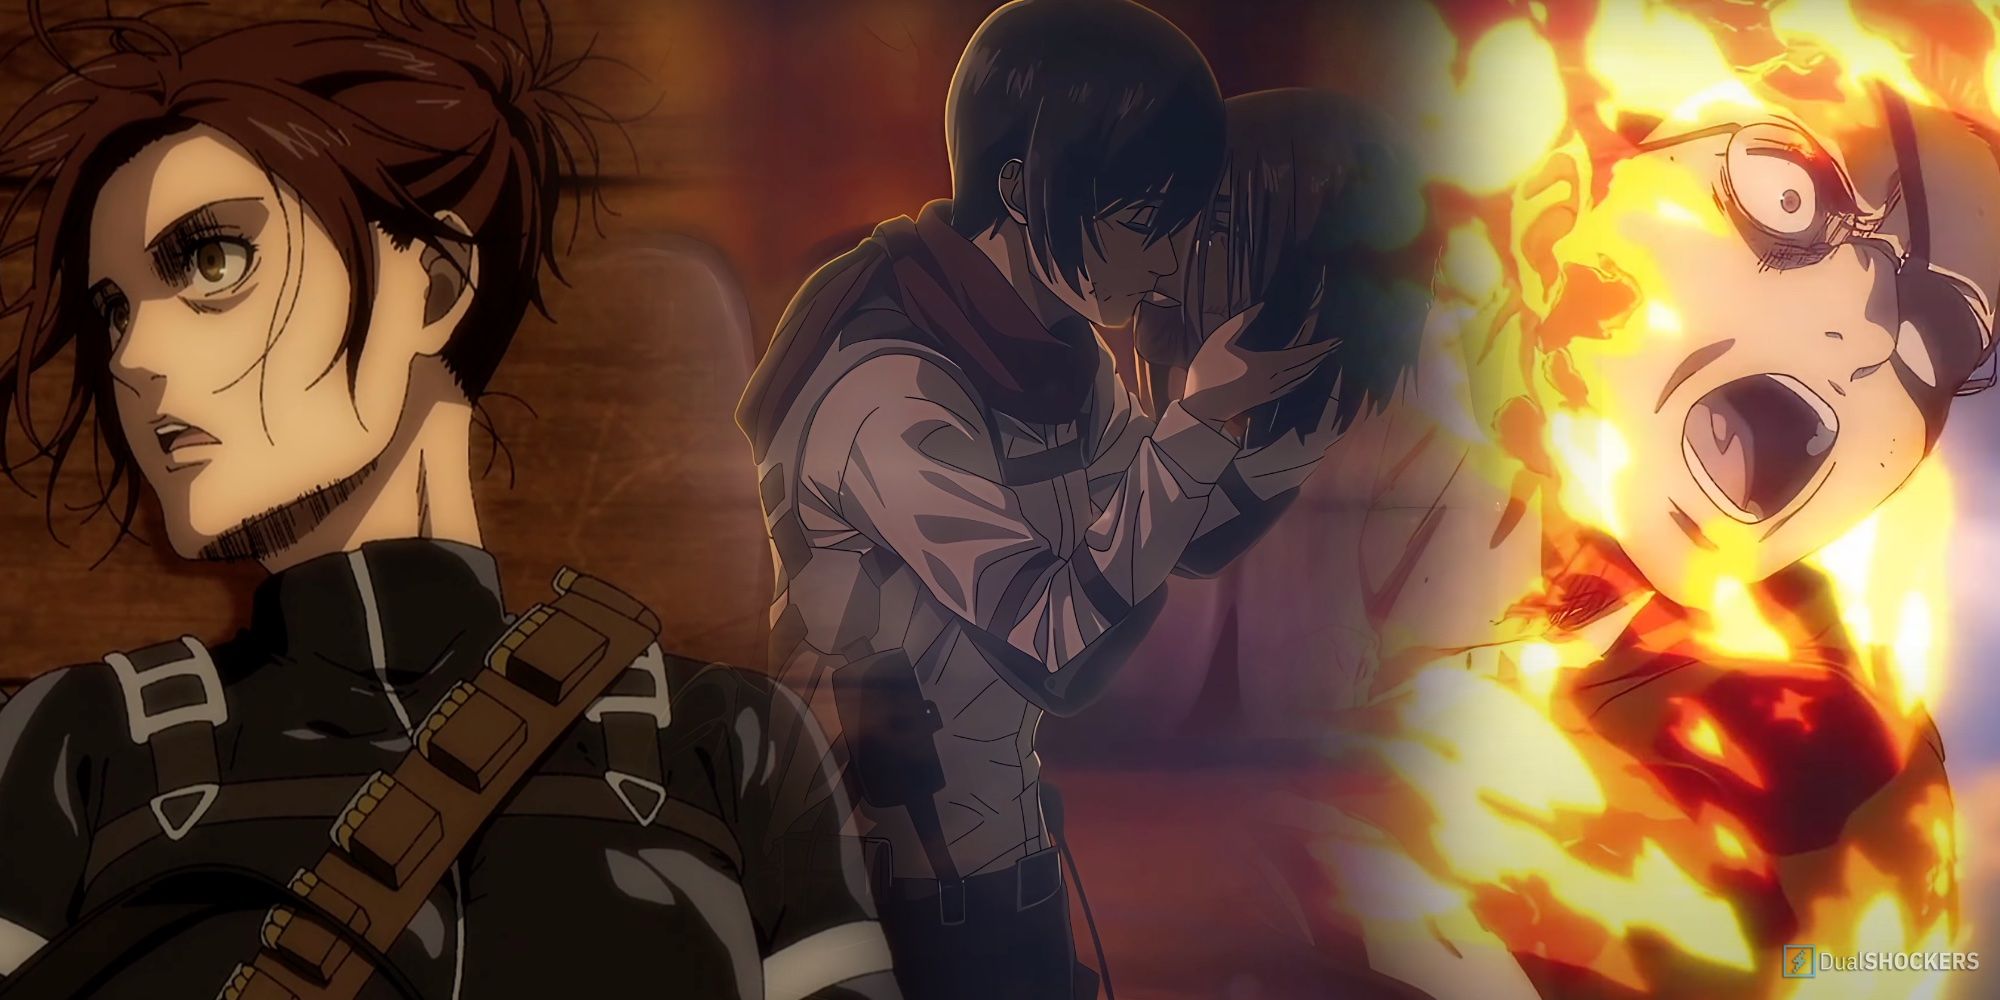 College of Sasha lying dead on the floor, Mikasa kissing Eren's head, and a burning Hange